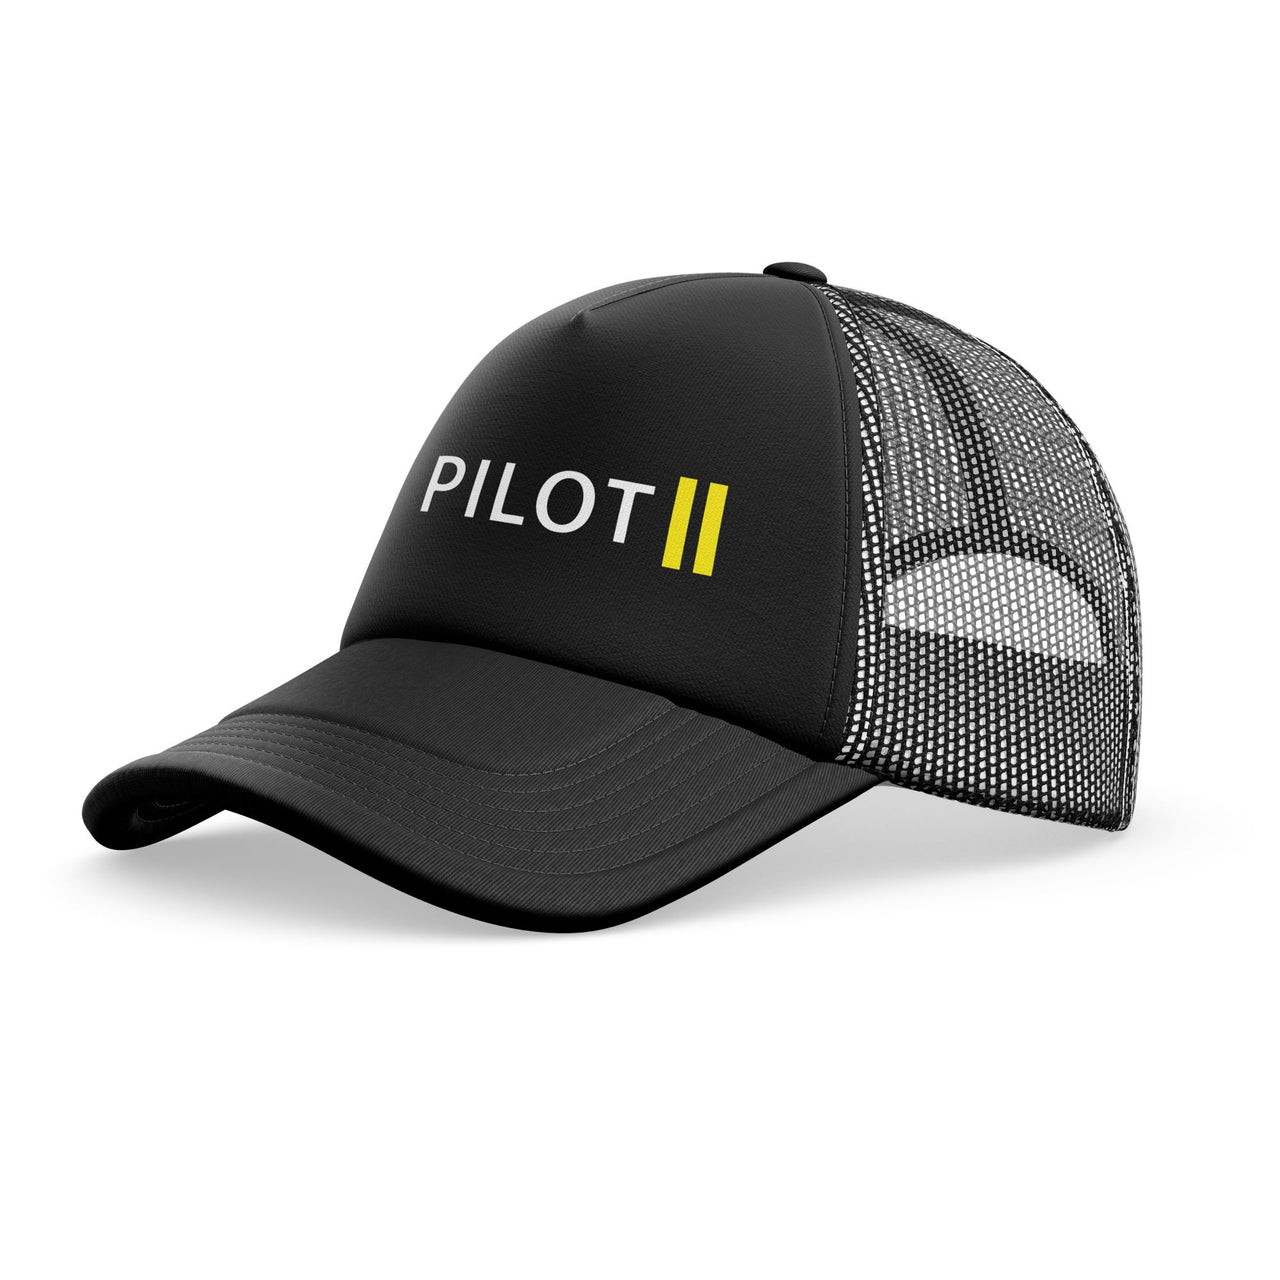 Pilot & Stripes (2 Lines) Designed Trucker Caps & Hats